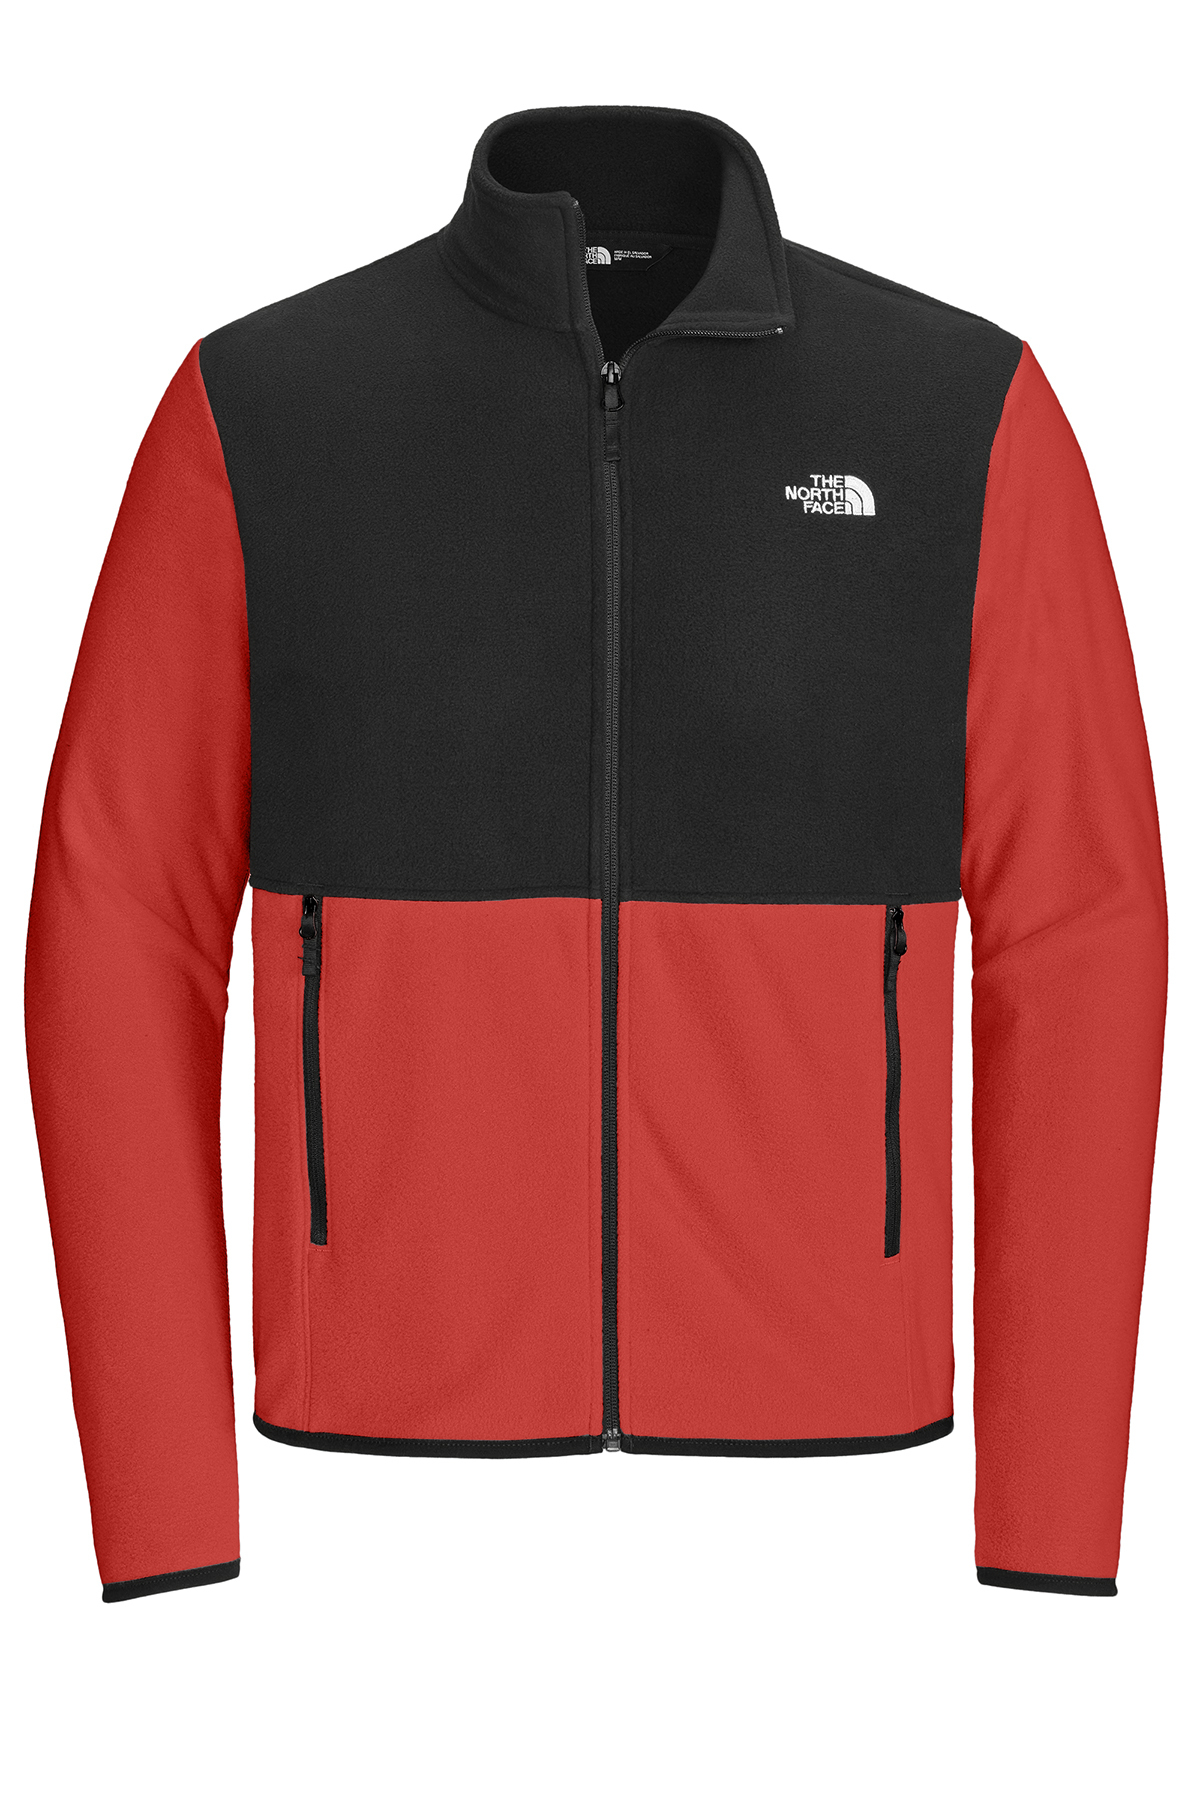 The North Face Glacier Full-Zip Fleece Jacket | Product | SanMar